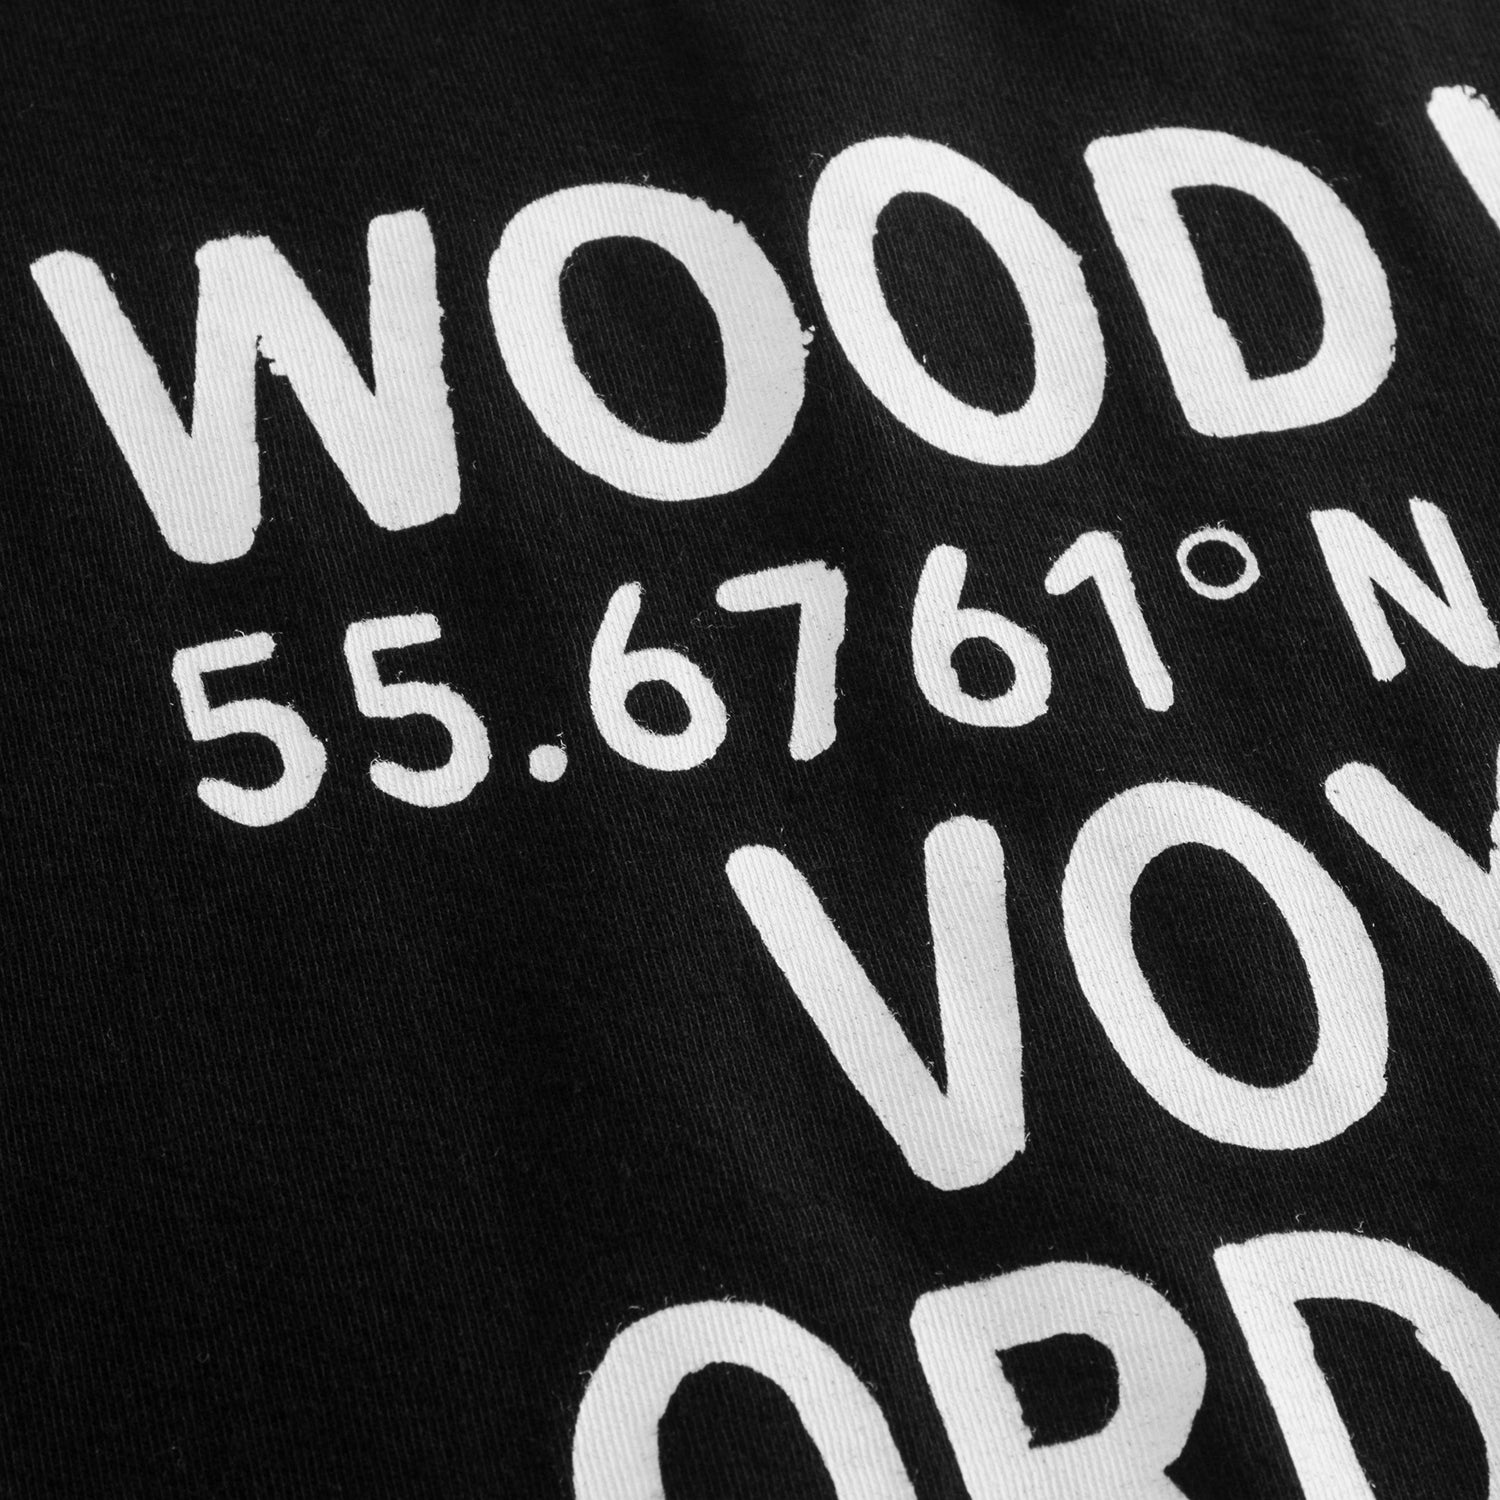 WOOD WOOD Voyages T shirt Black